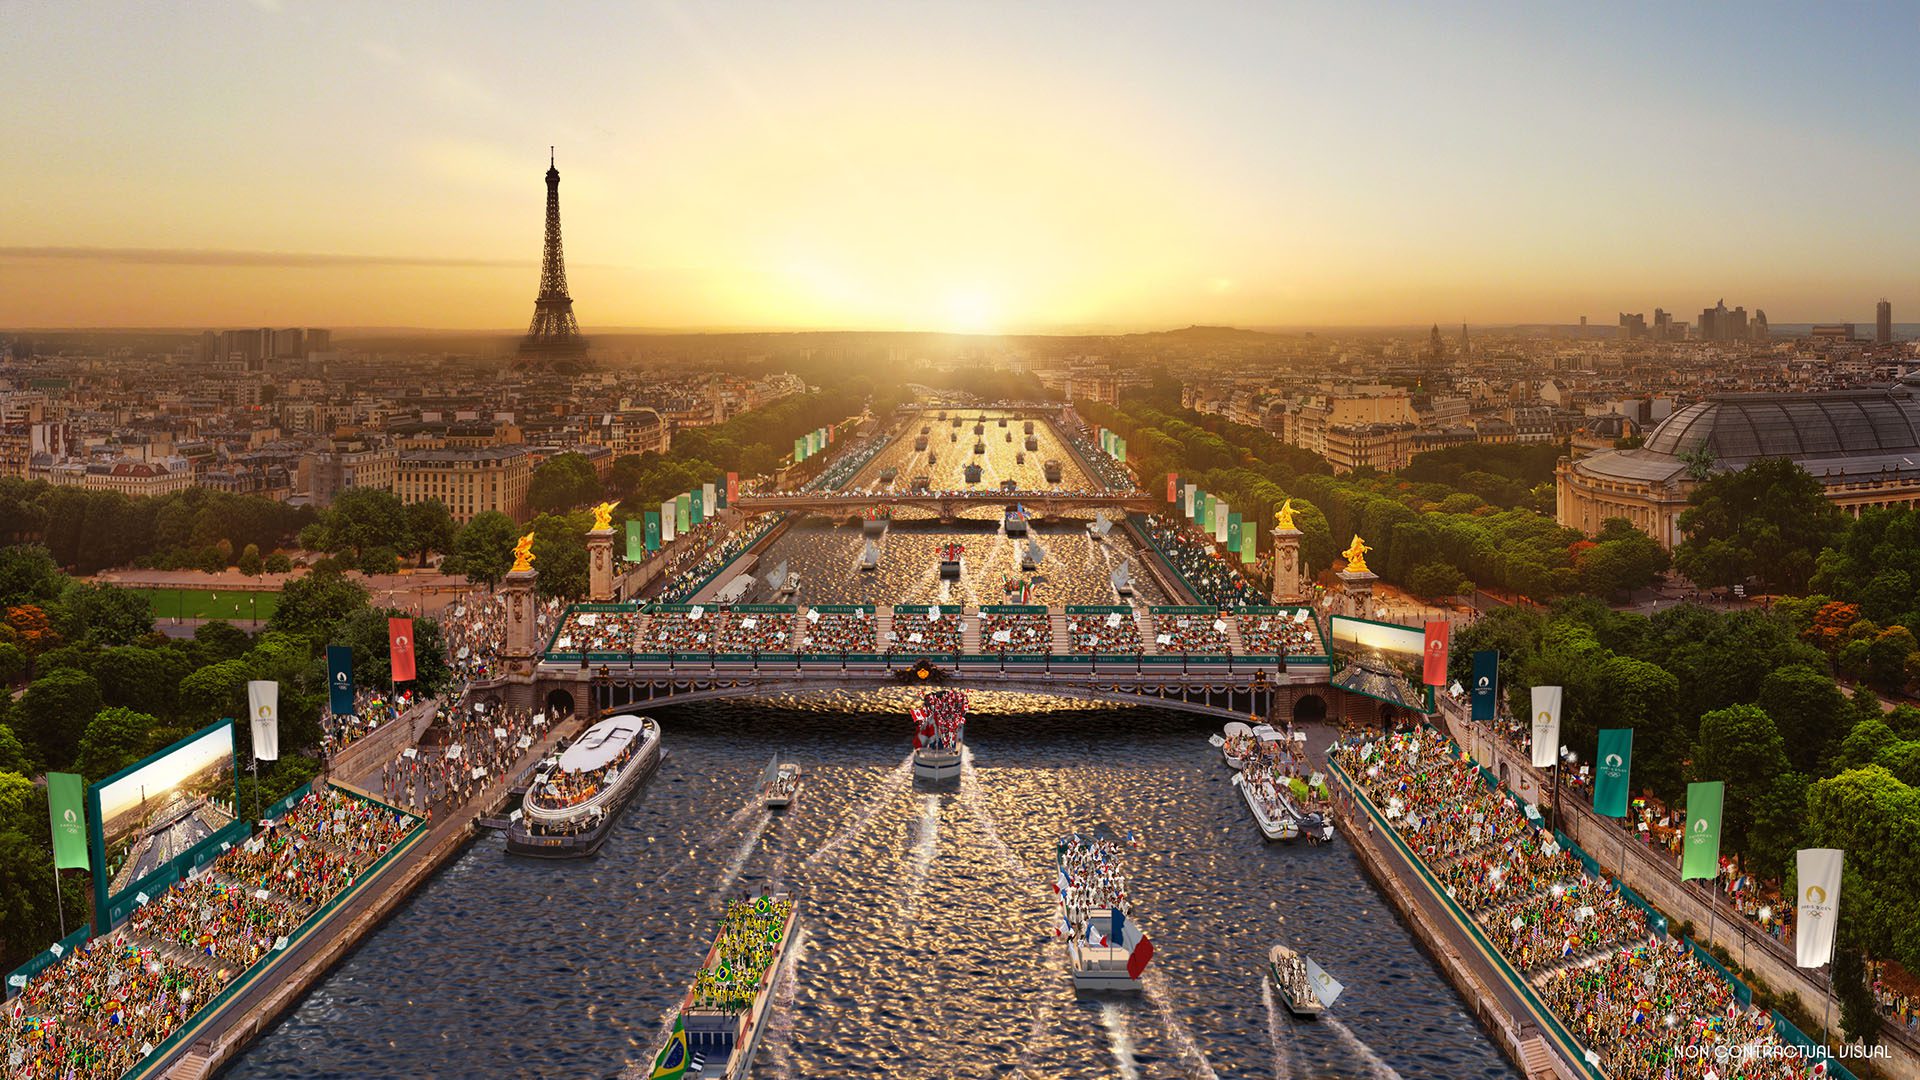 Paris 2024 Summer Olympic on Seine, Image by Paris 2024, Florian Hulleu